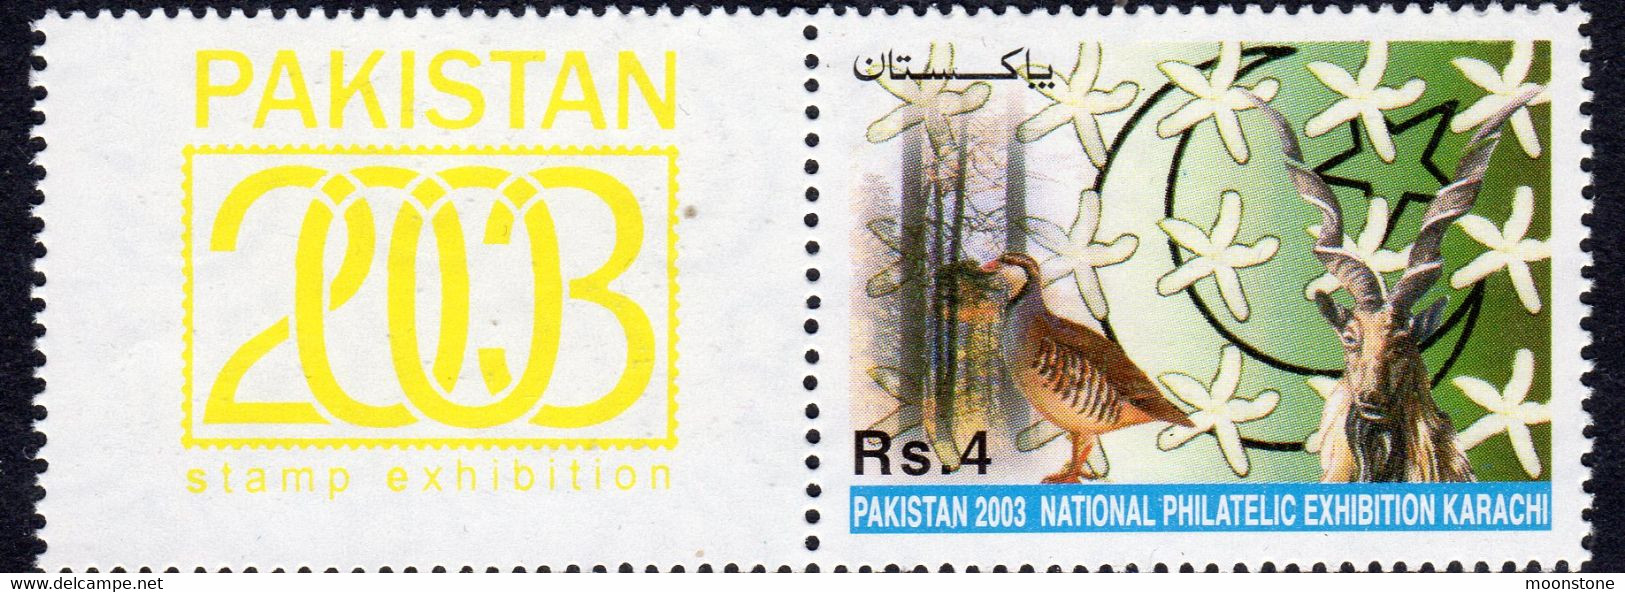 Pakistan 2003 National Philatelic Exhibition + Yellow Label, Wmk. Upright, MNH, SG 1178 (E) - Pakistan